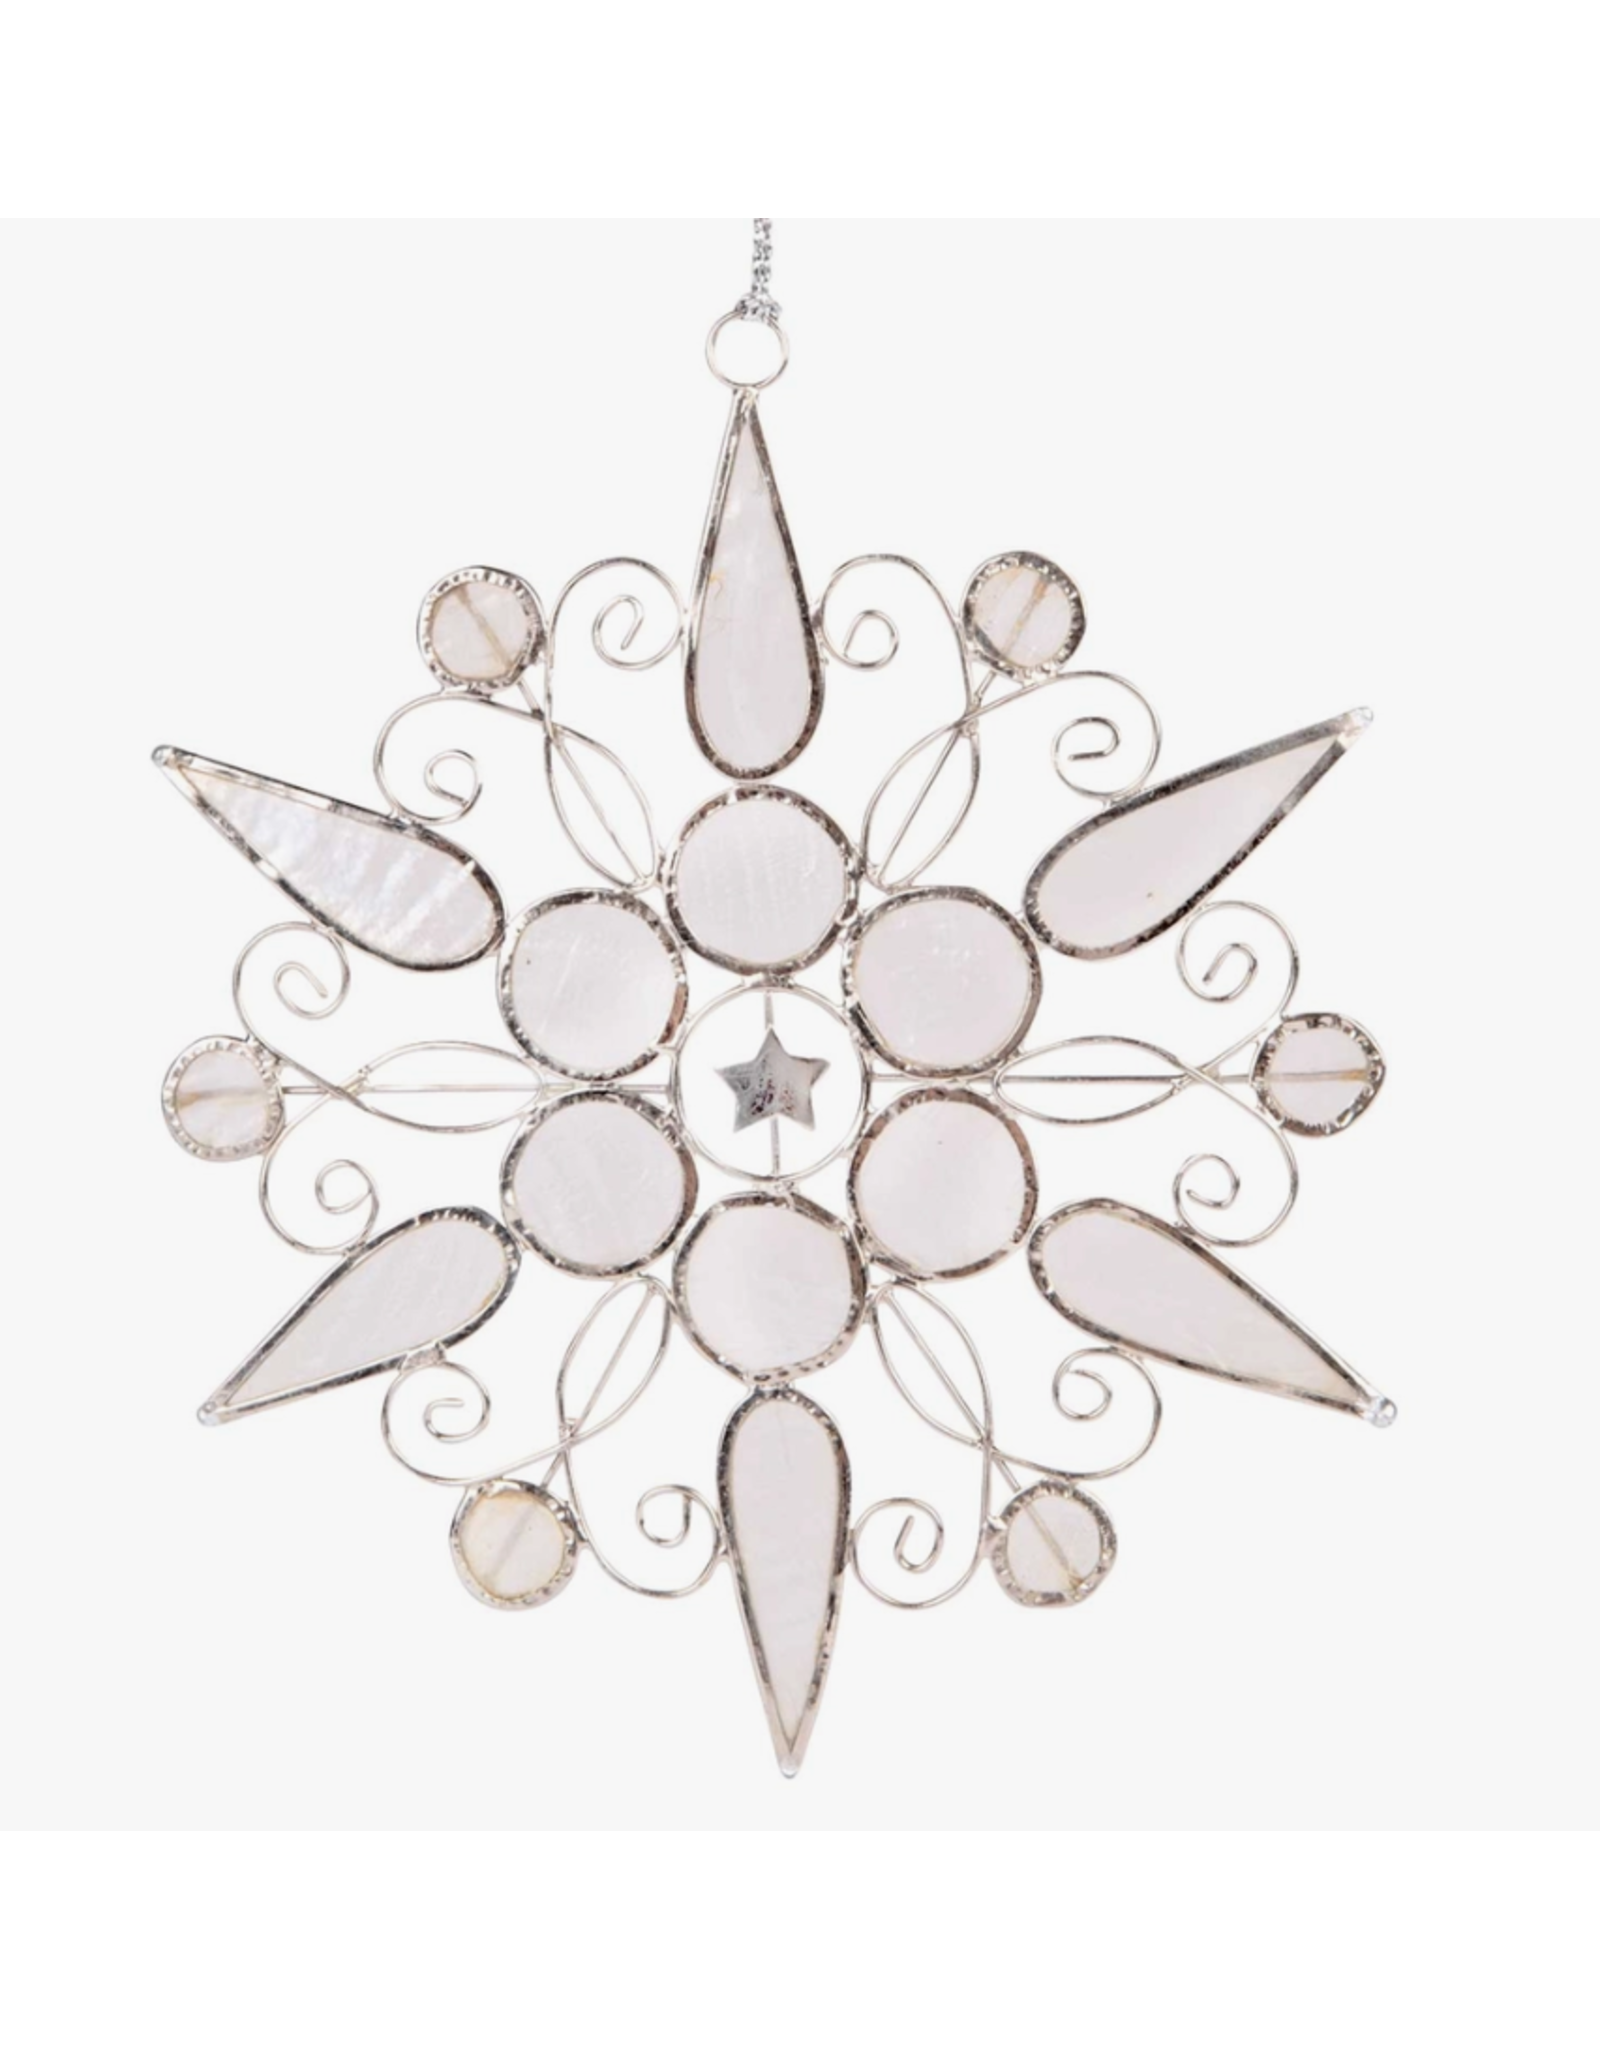 Philippines White Capiz Snowflake Ornament, Philippines